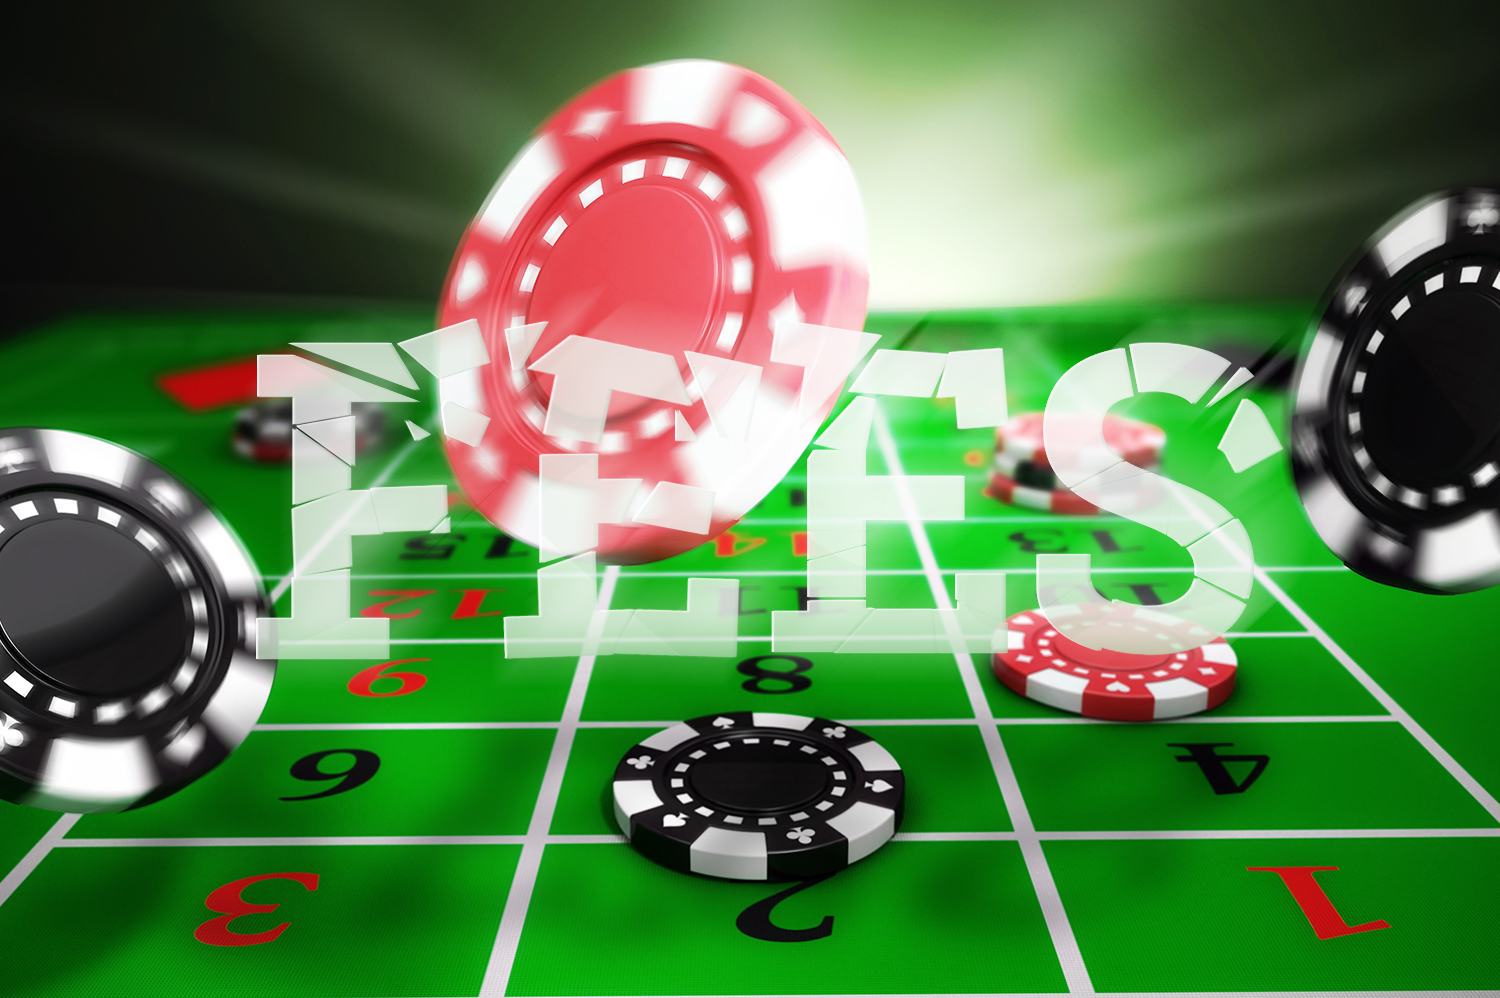 Funz free casino slot games with bonus rounds